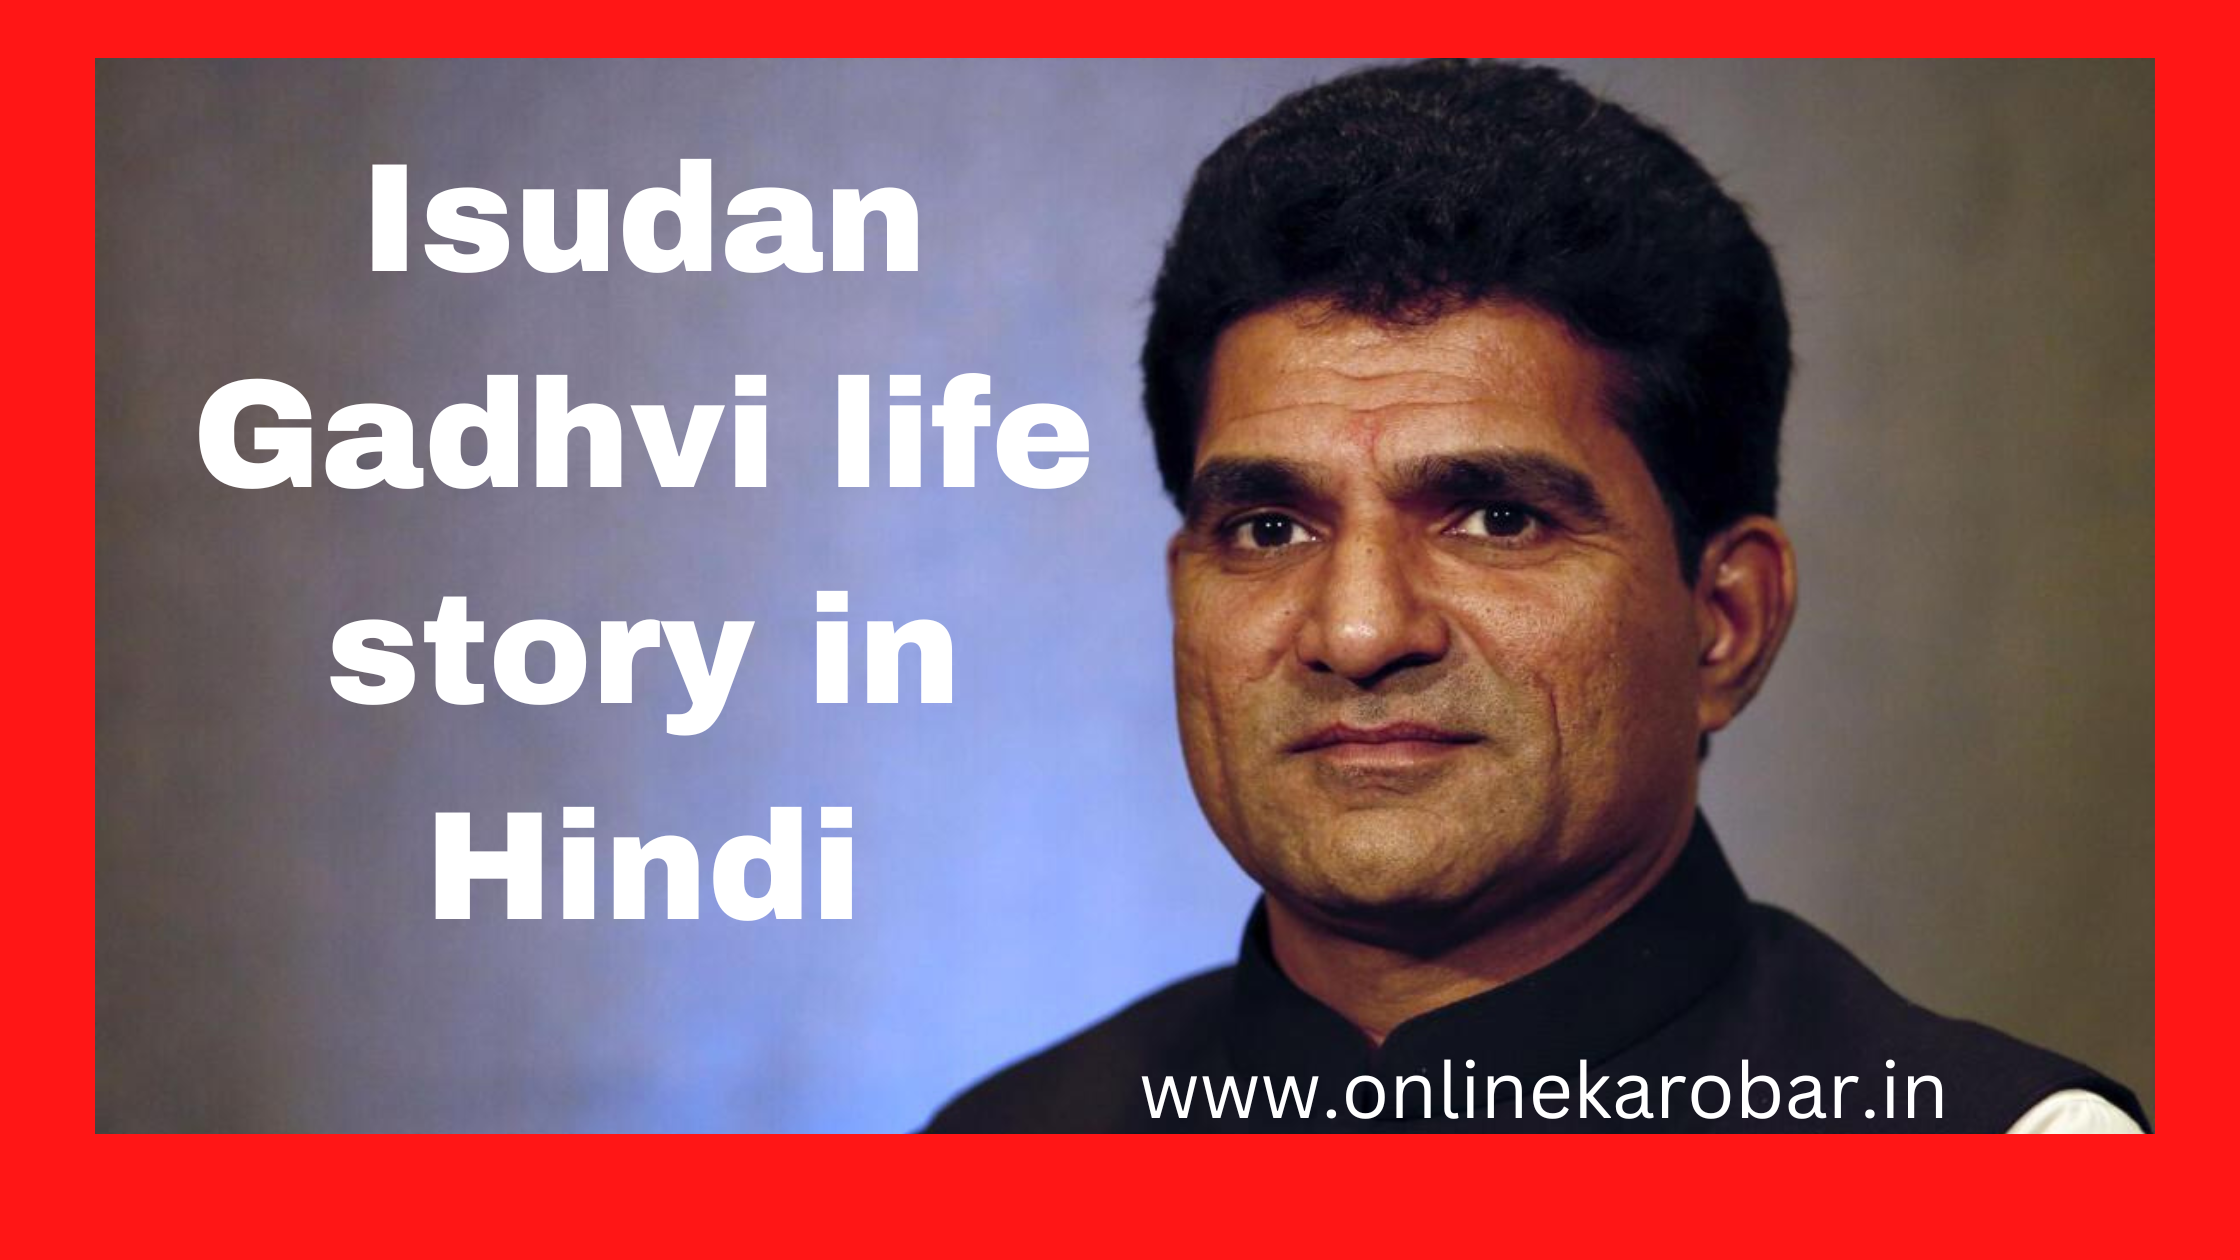 Isudan Gadhvi life story